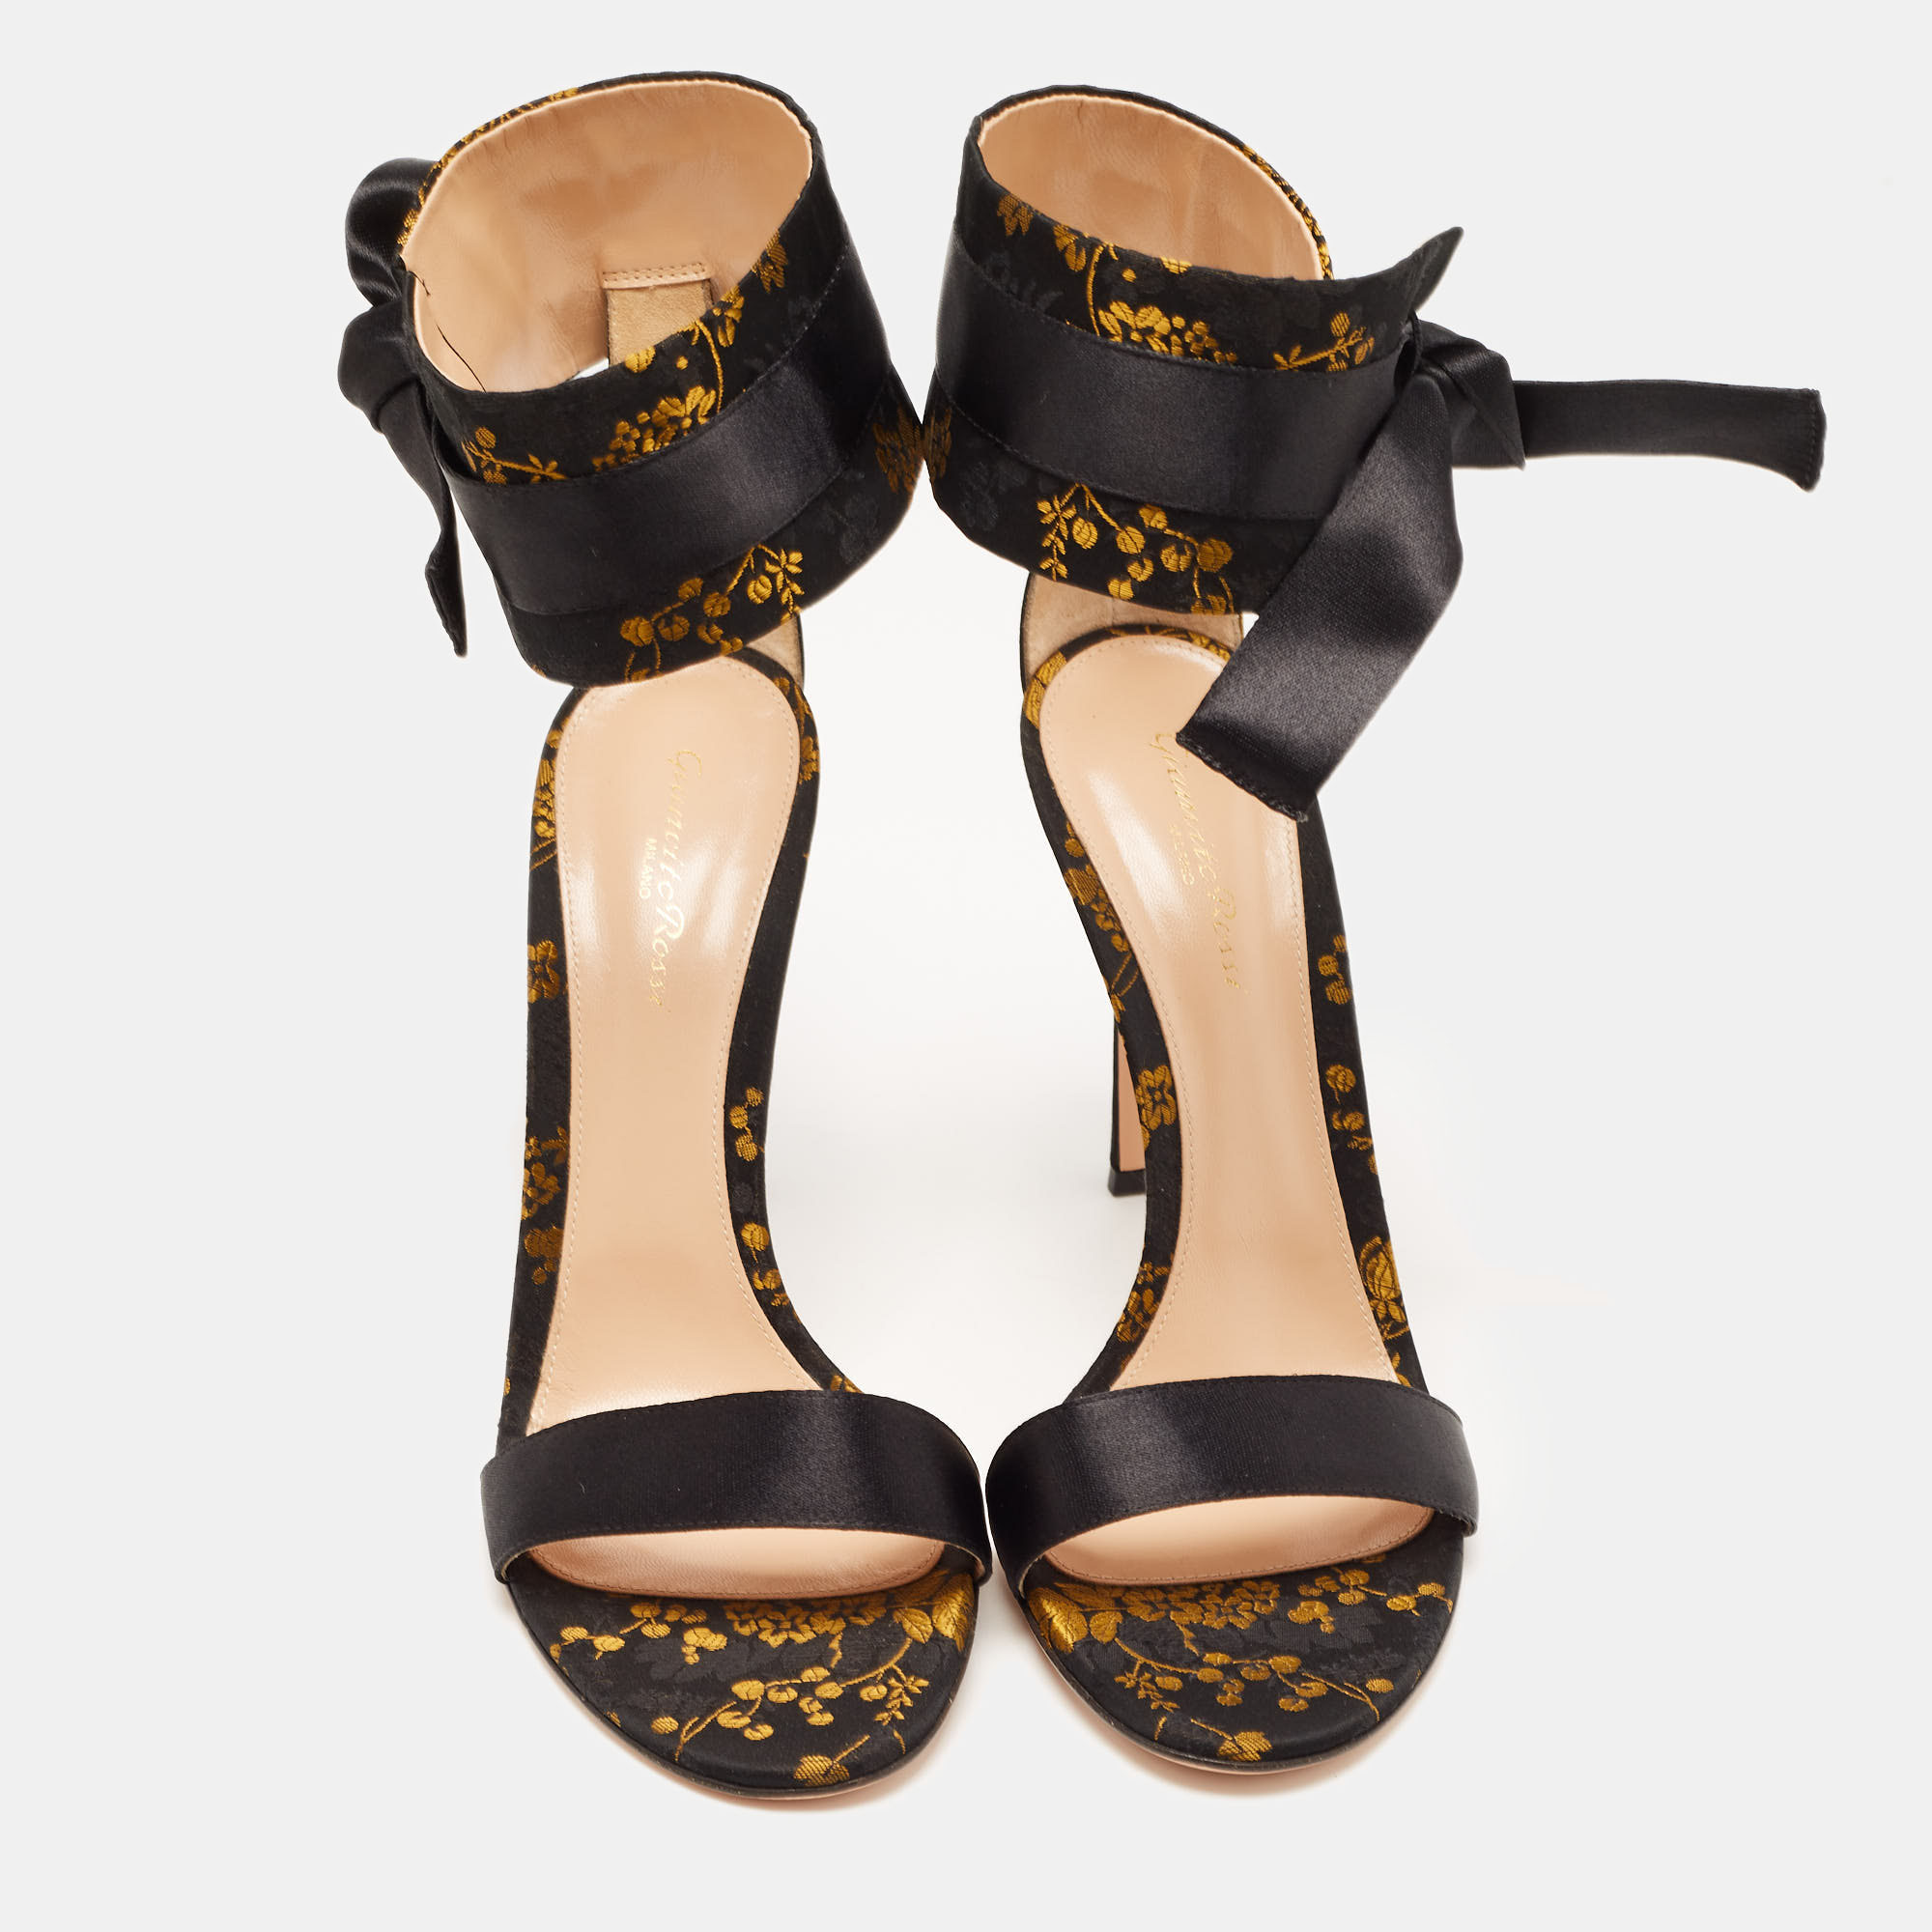 Gianvito Rossi Black/Yellow Jacquard Fabric Ankle Strap Open Toe Sandals Size 42